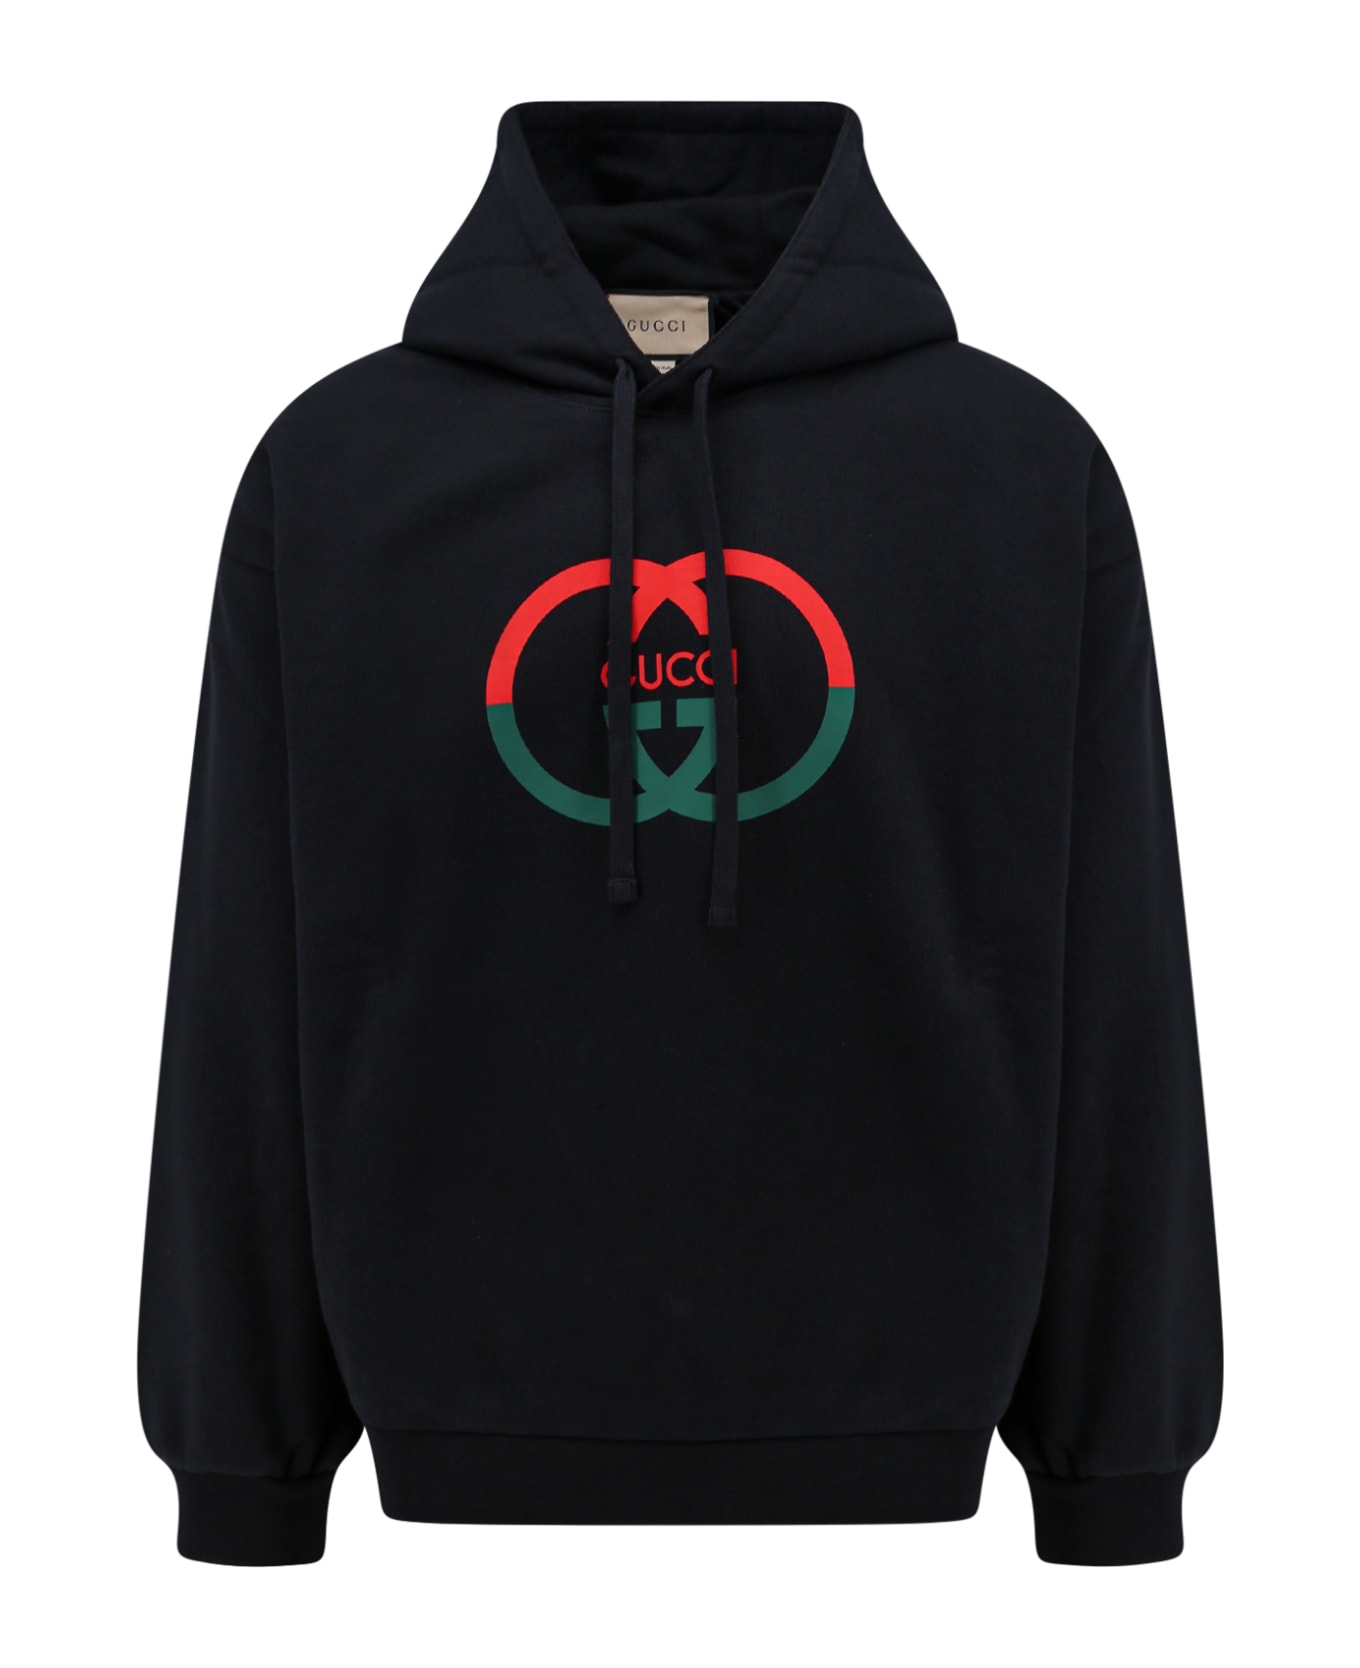 Gucci Sweatshirt - BLACKMC